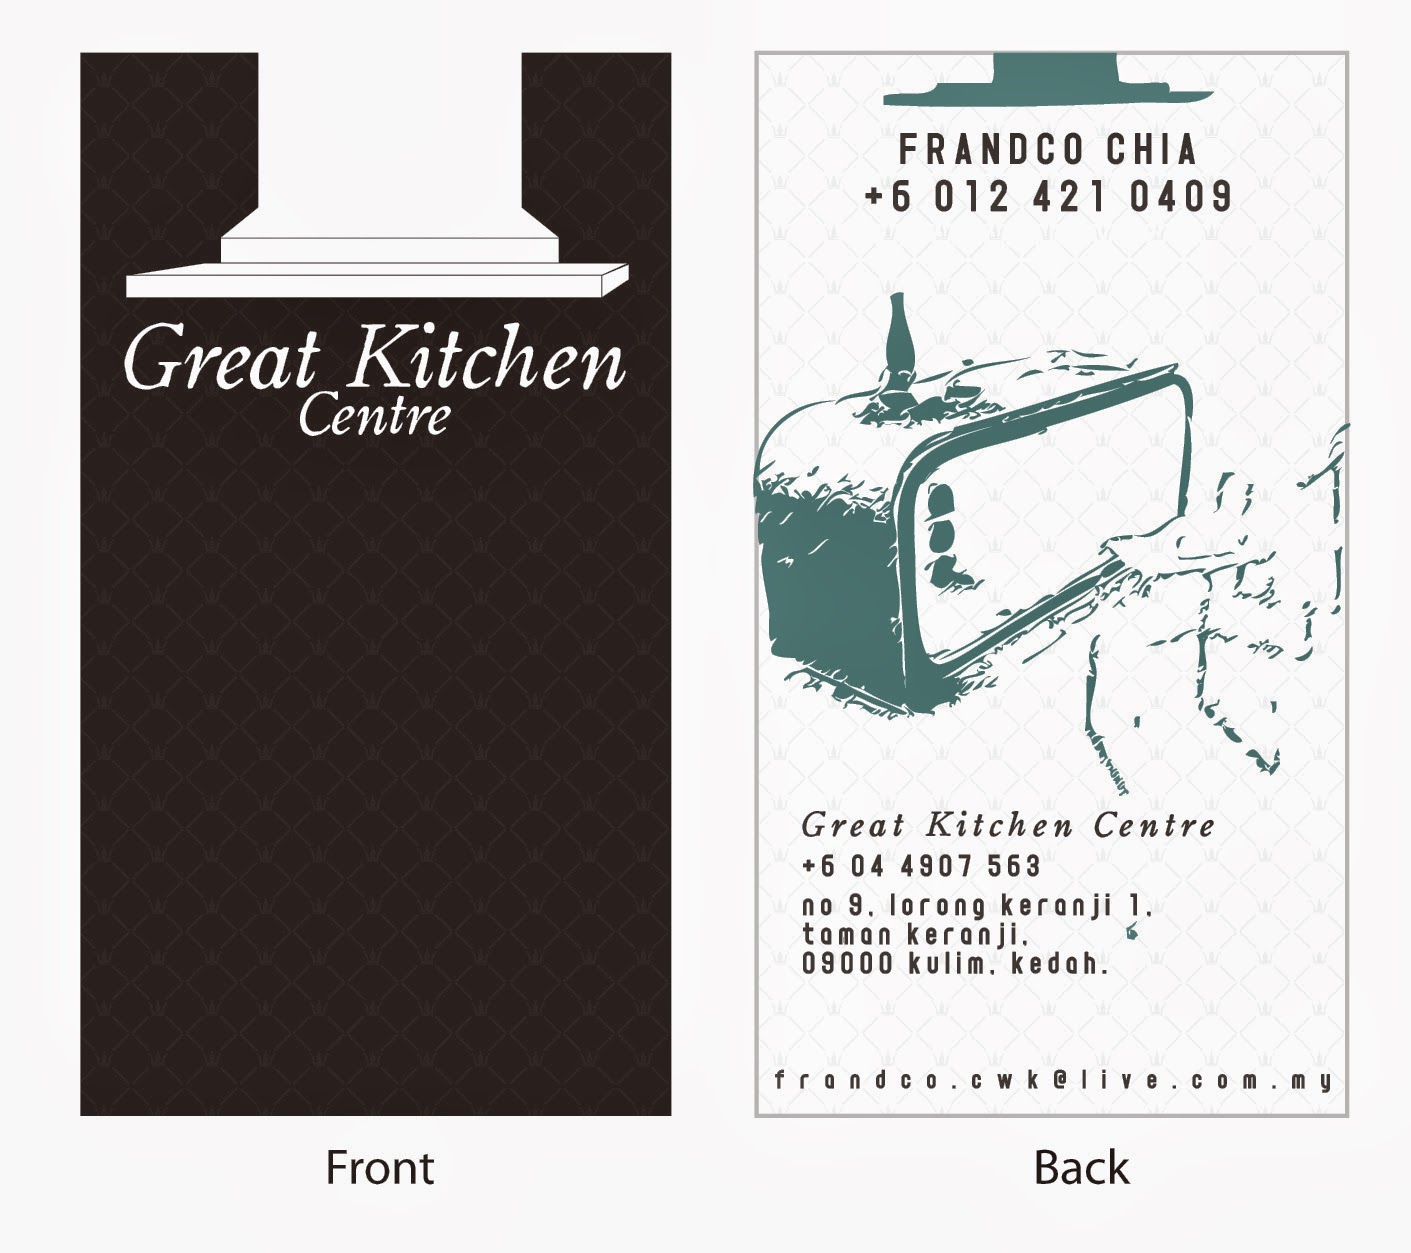 K's design: 2010 - Great Kitchen Centre's Business Card design